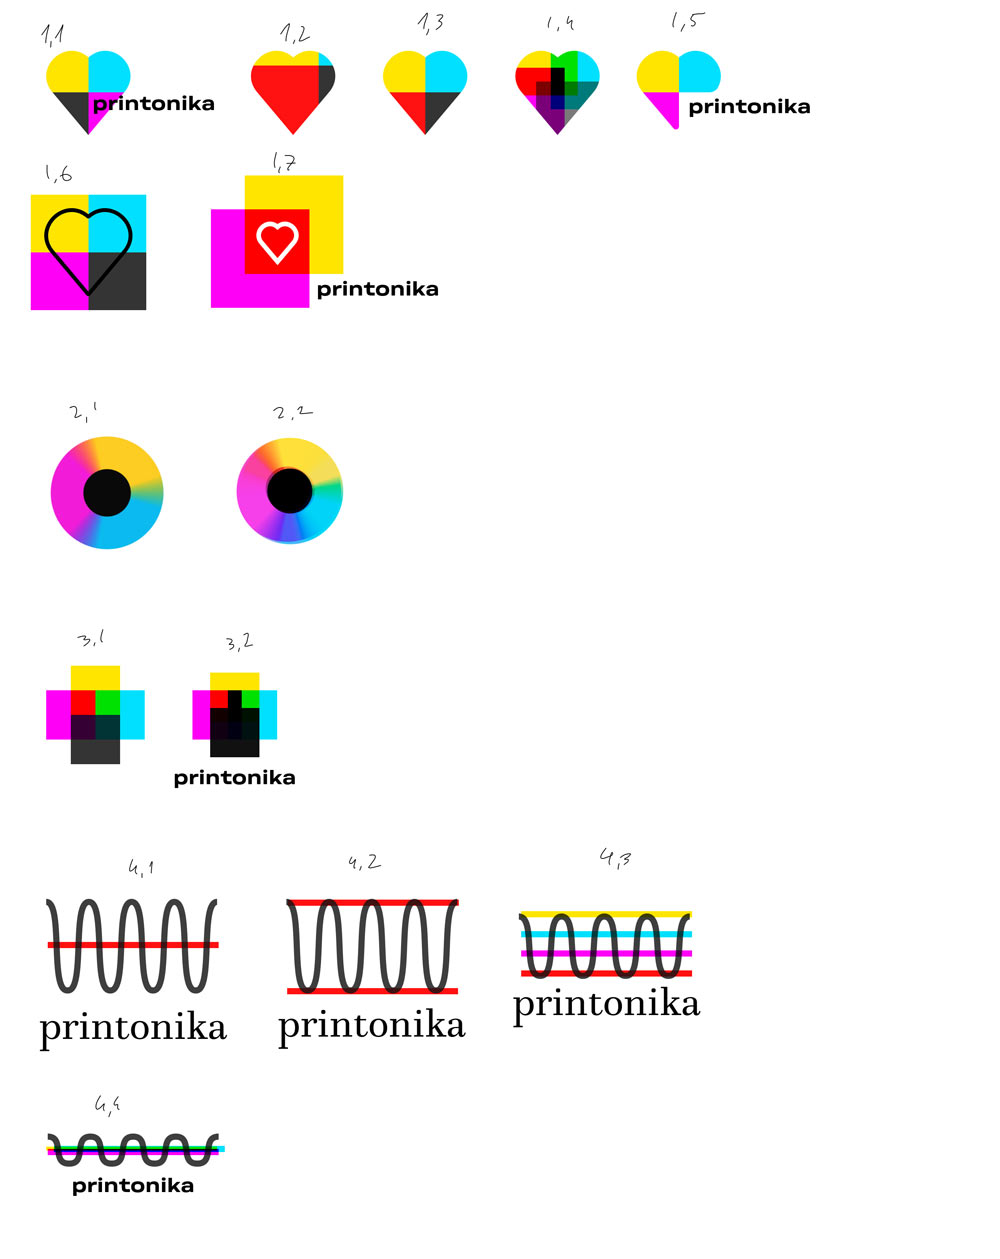 printonika process 04